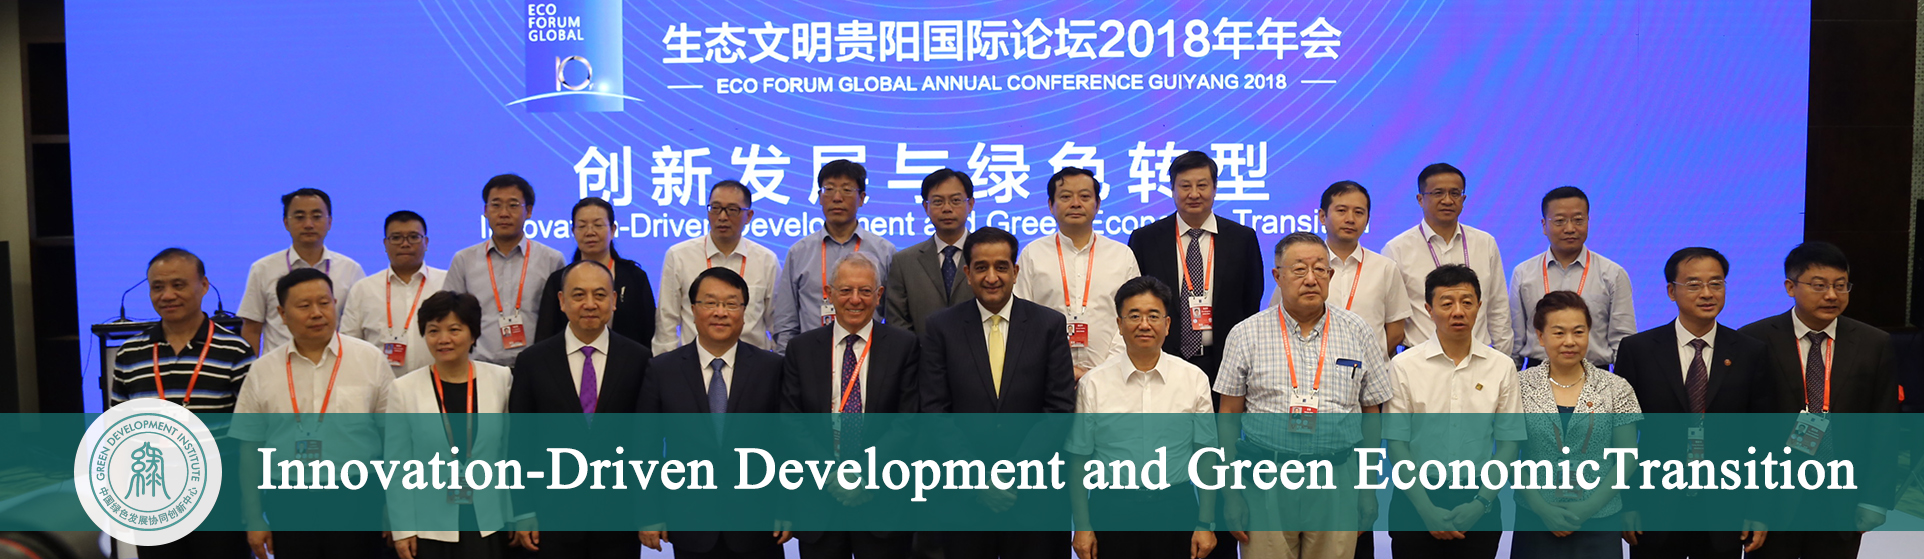 Plenary Session on Innovation-Driven Development and Green EconomicTransition